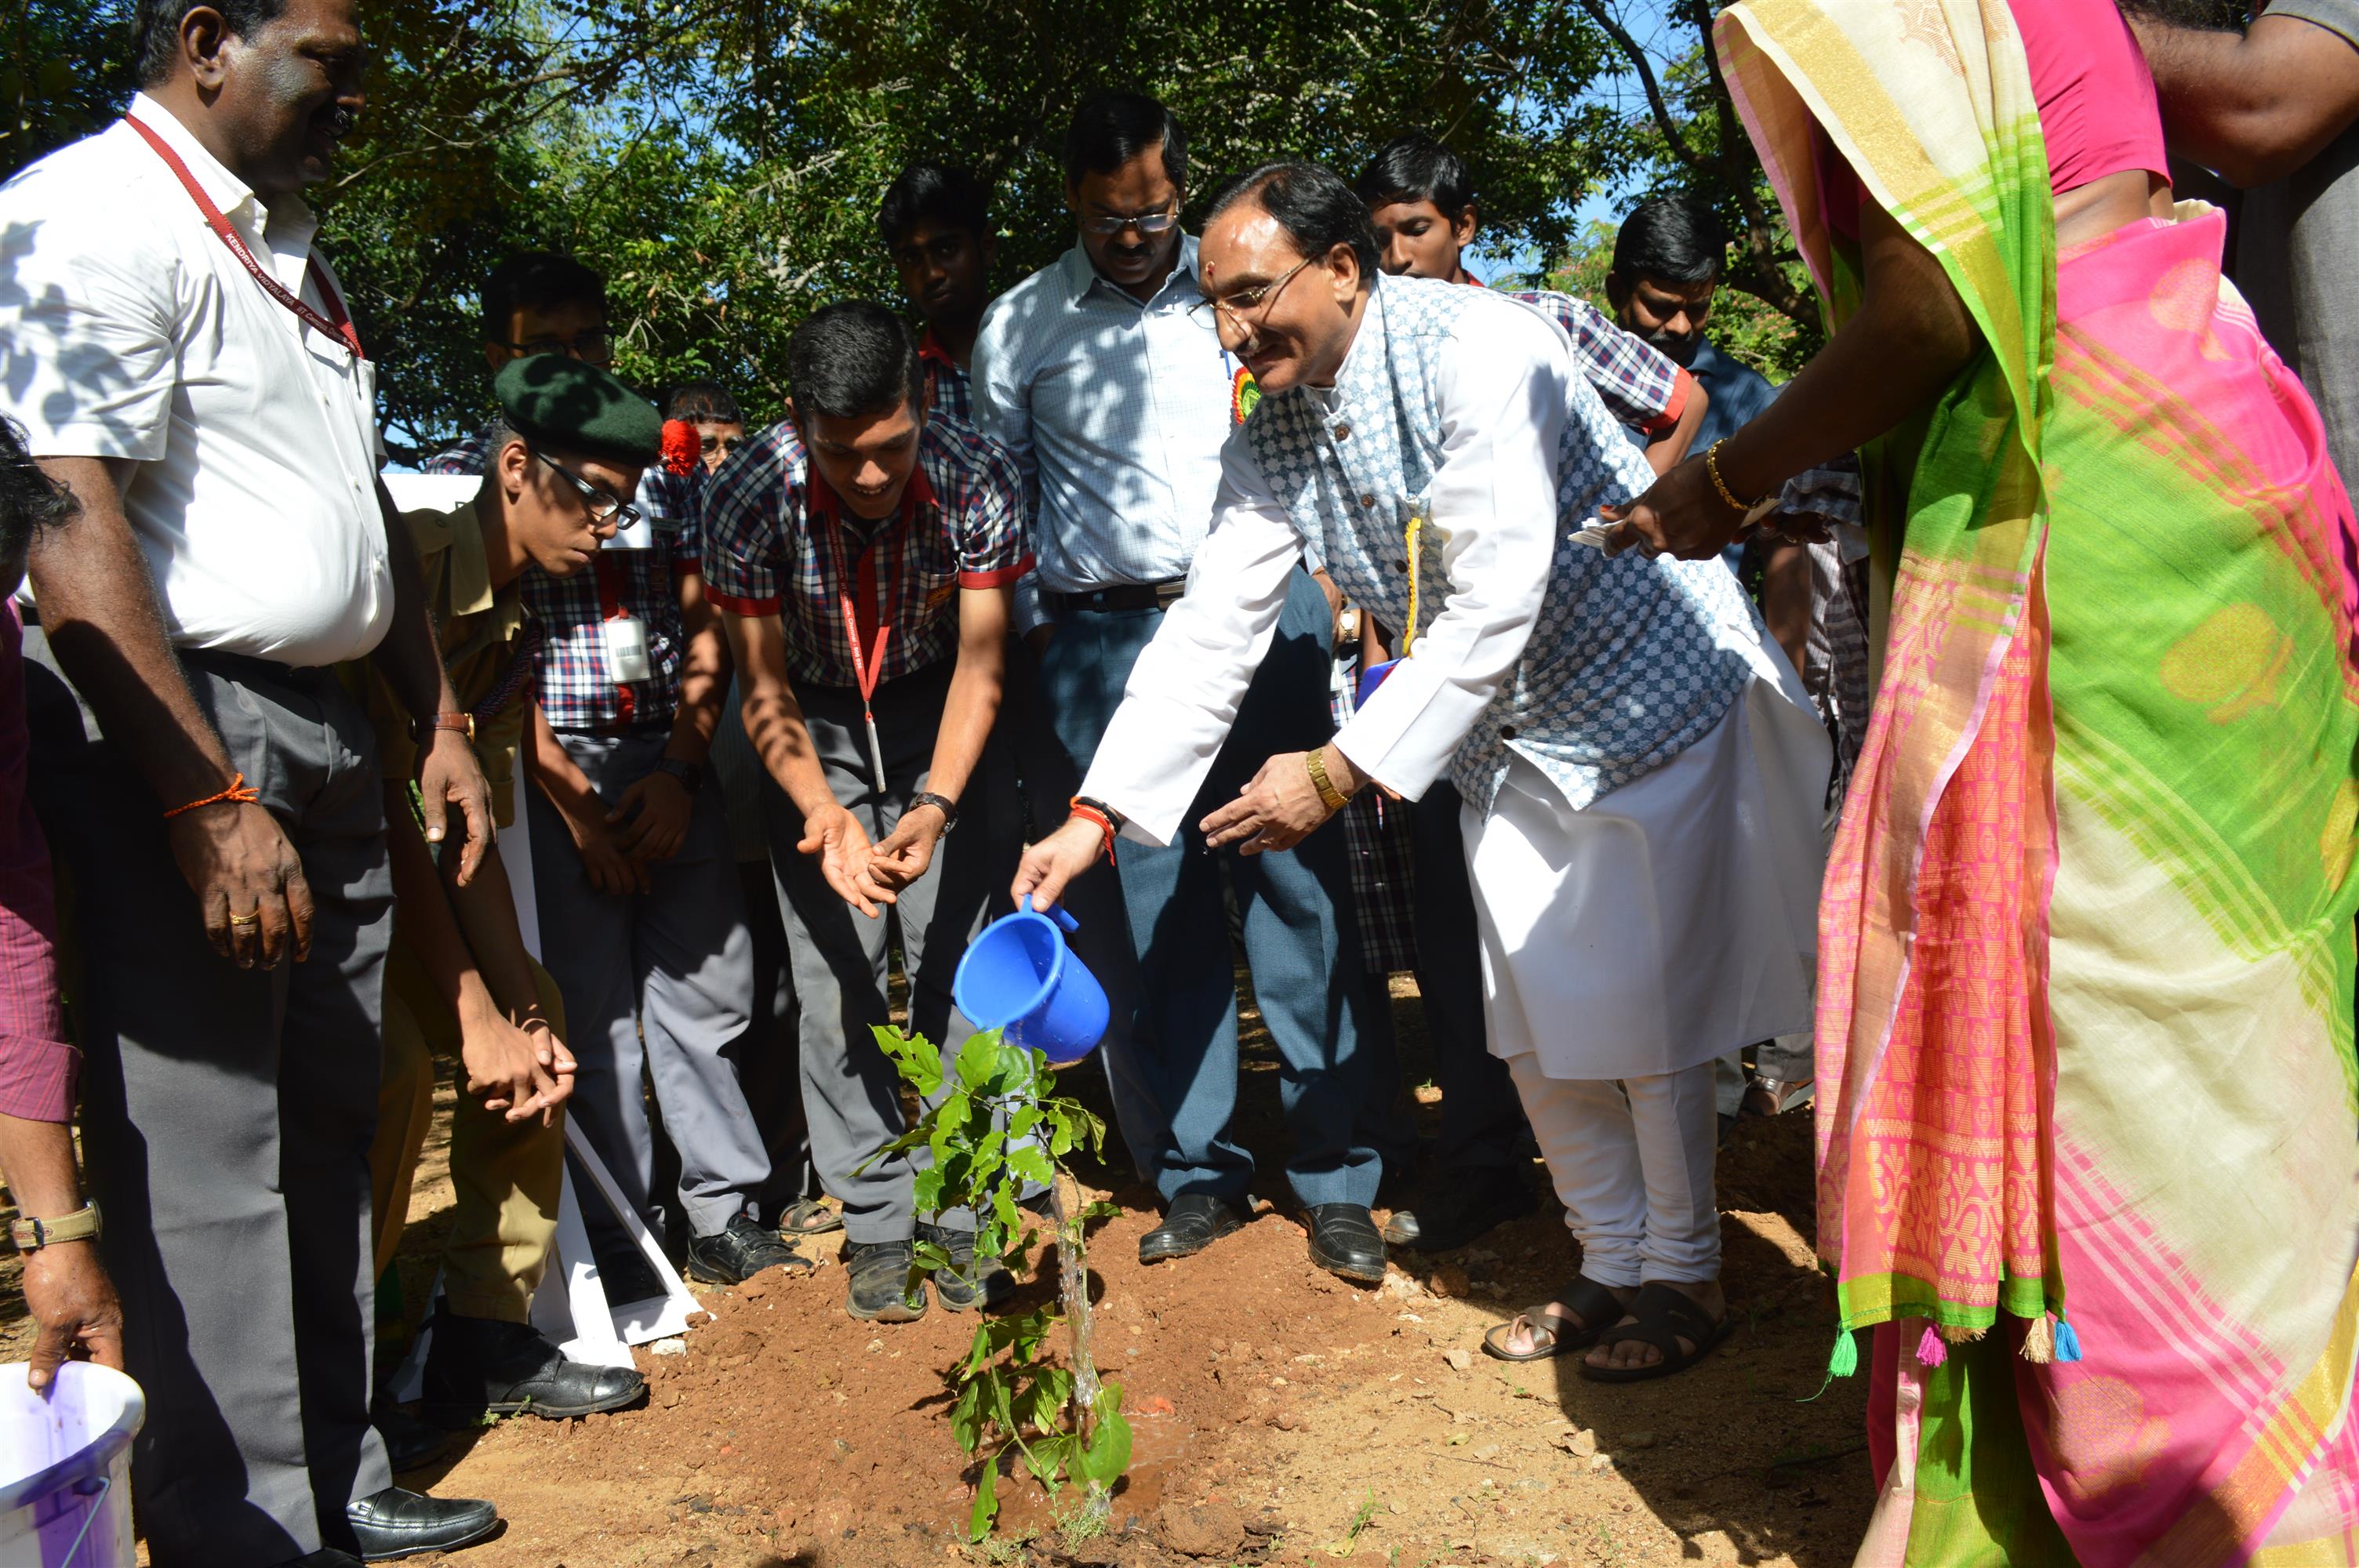 Shri Ramesh Pokhriyal Nishank, Union Minister of Human Resource Development is planting a tree sapling at the Kendriya Vidyalaya in IIT Campus, Chennai today (30.09.19).